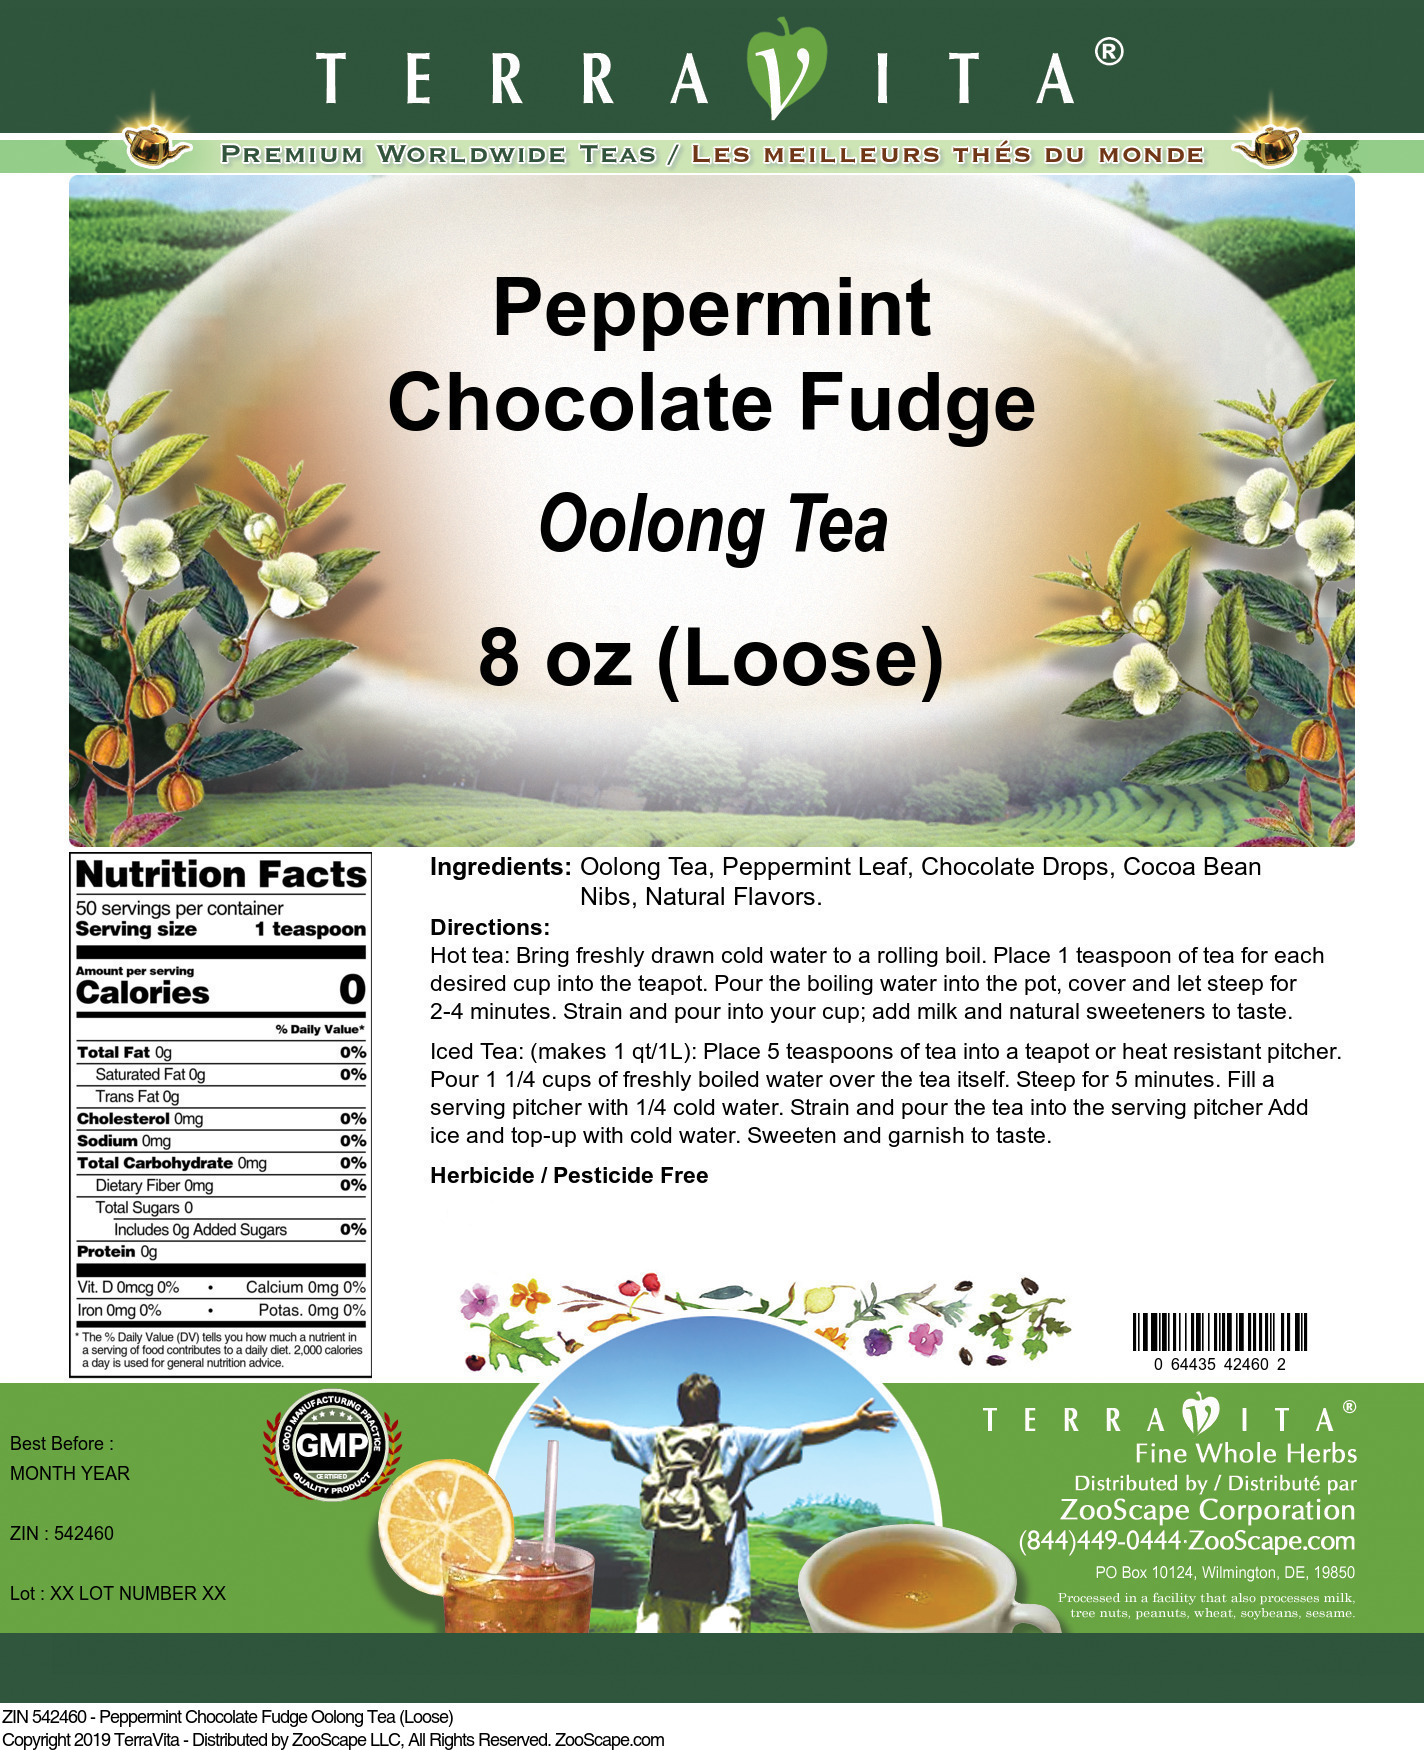 Peppermint Chocolate Fudge Oolong Tea (Loose) - Label